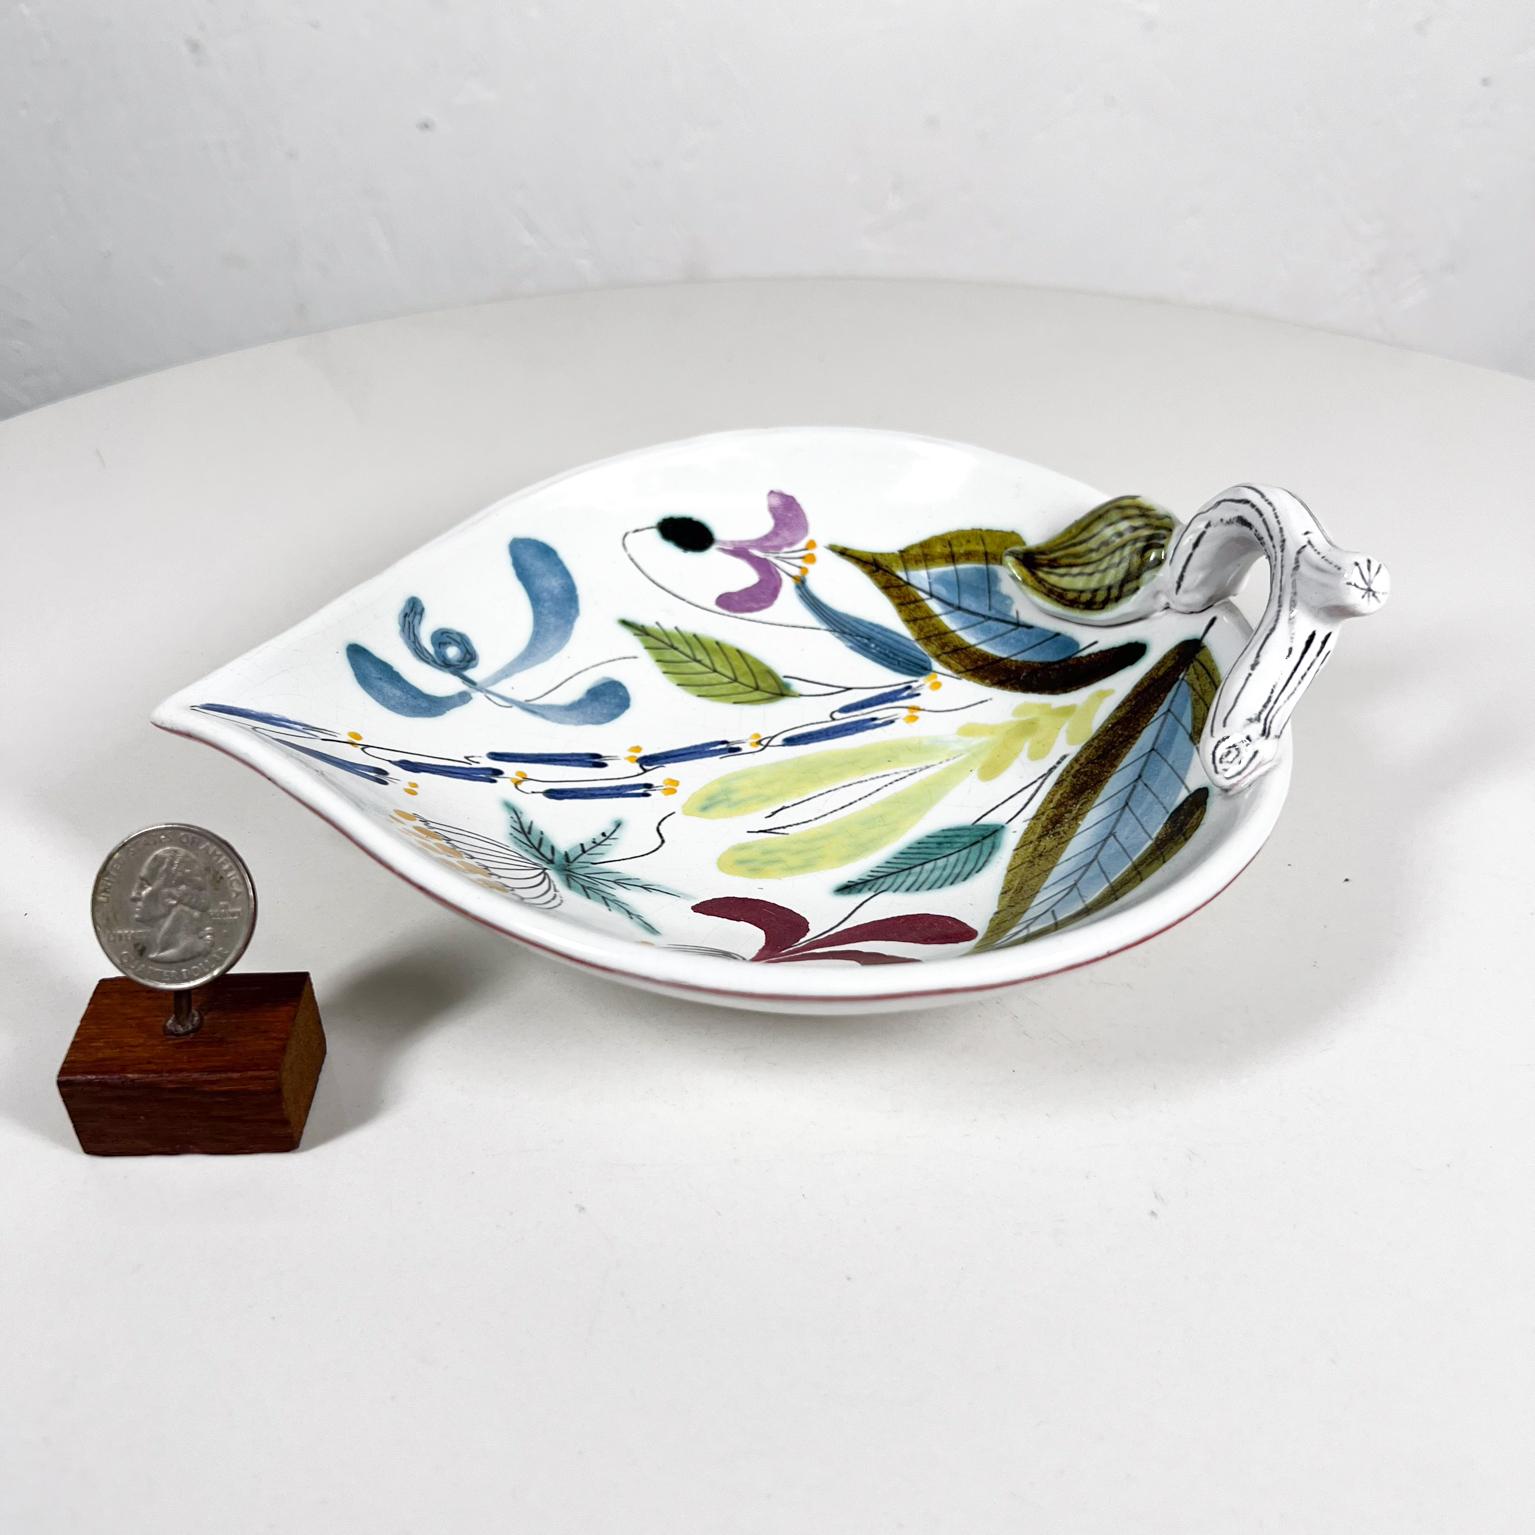 1960s Decorative Art Leaf Ceramic Plate
Stig Lindberg for Gustavsberg Studio Floral Leaf Shaped Dish
Signed Sweden
6.75 w x 7.75 d x 2.38 h
Preowned Original vintage condition
Please see images provided.